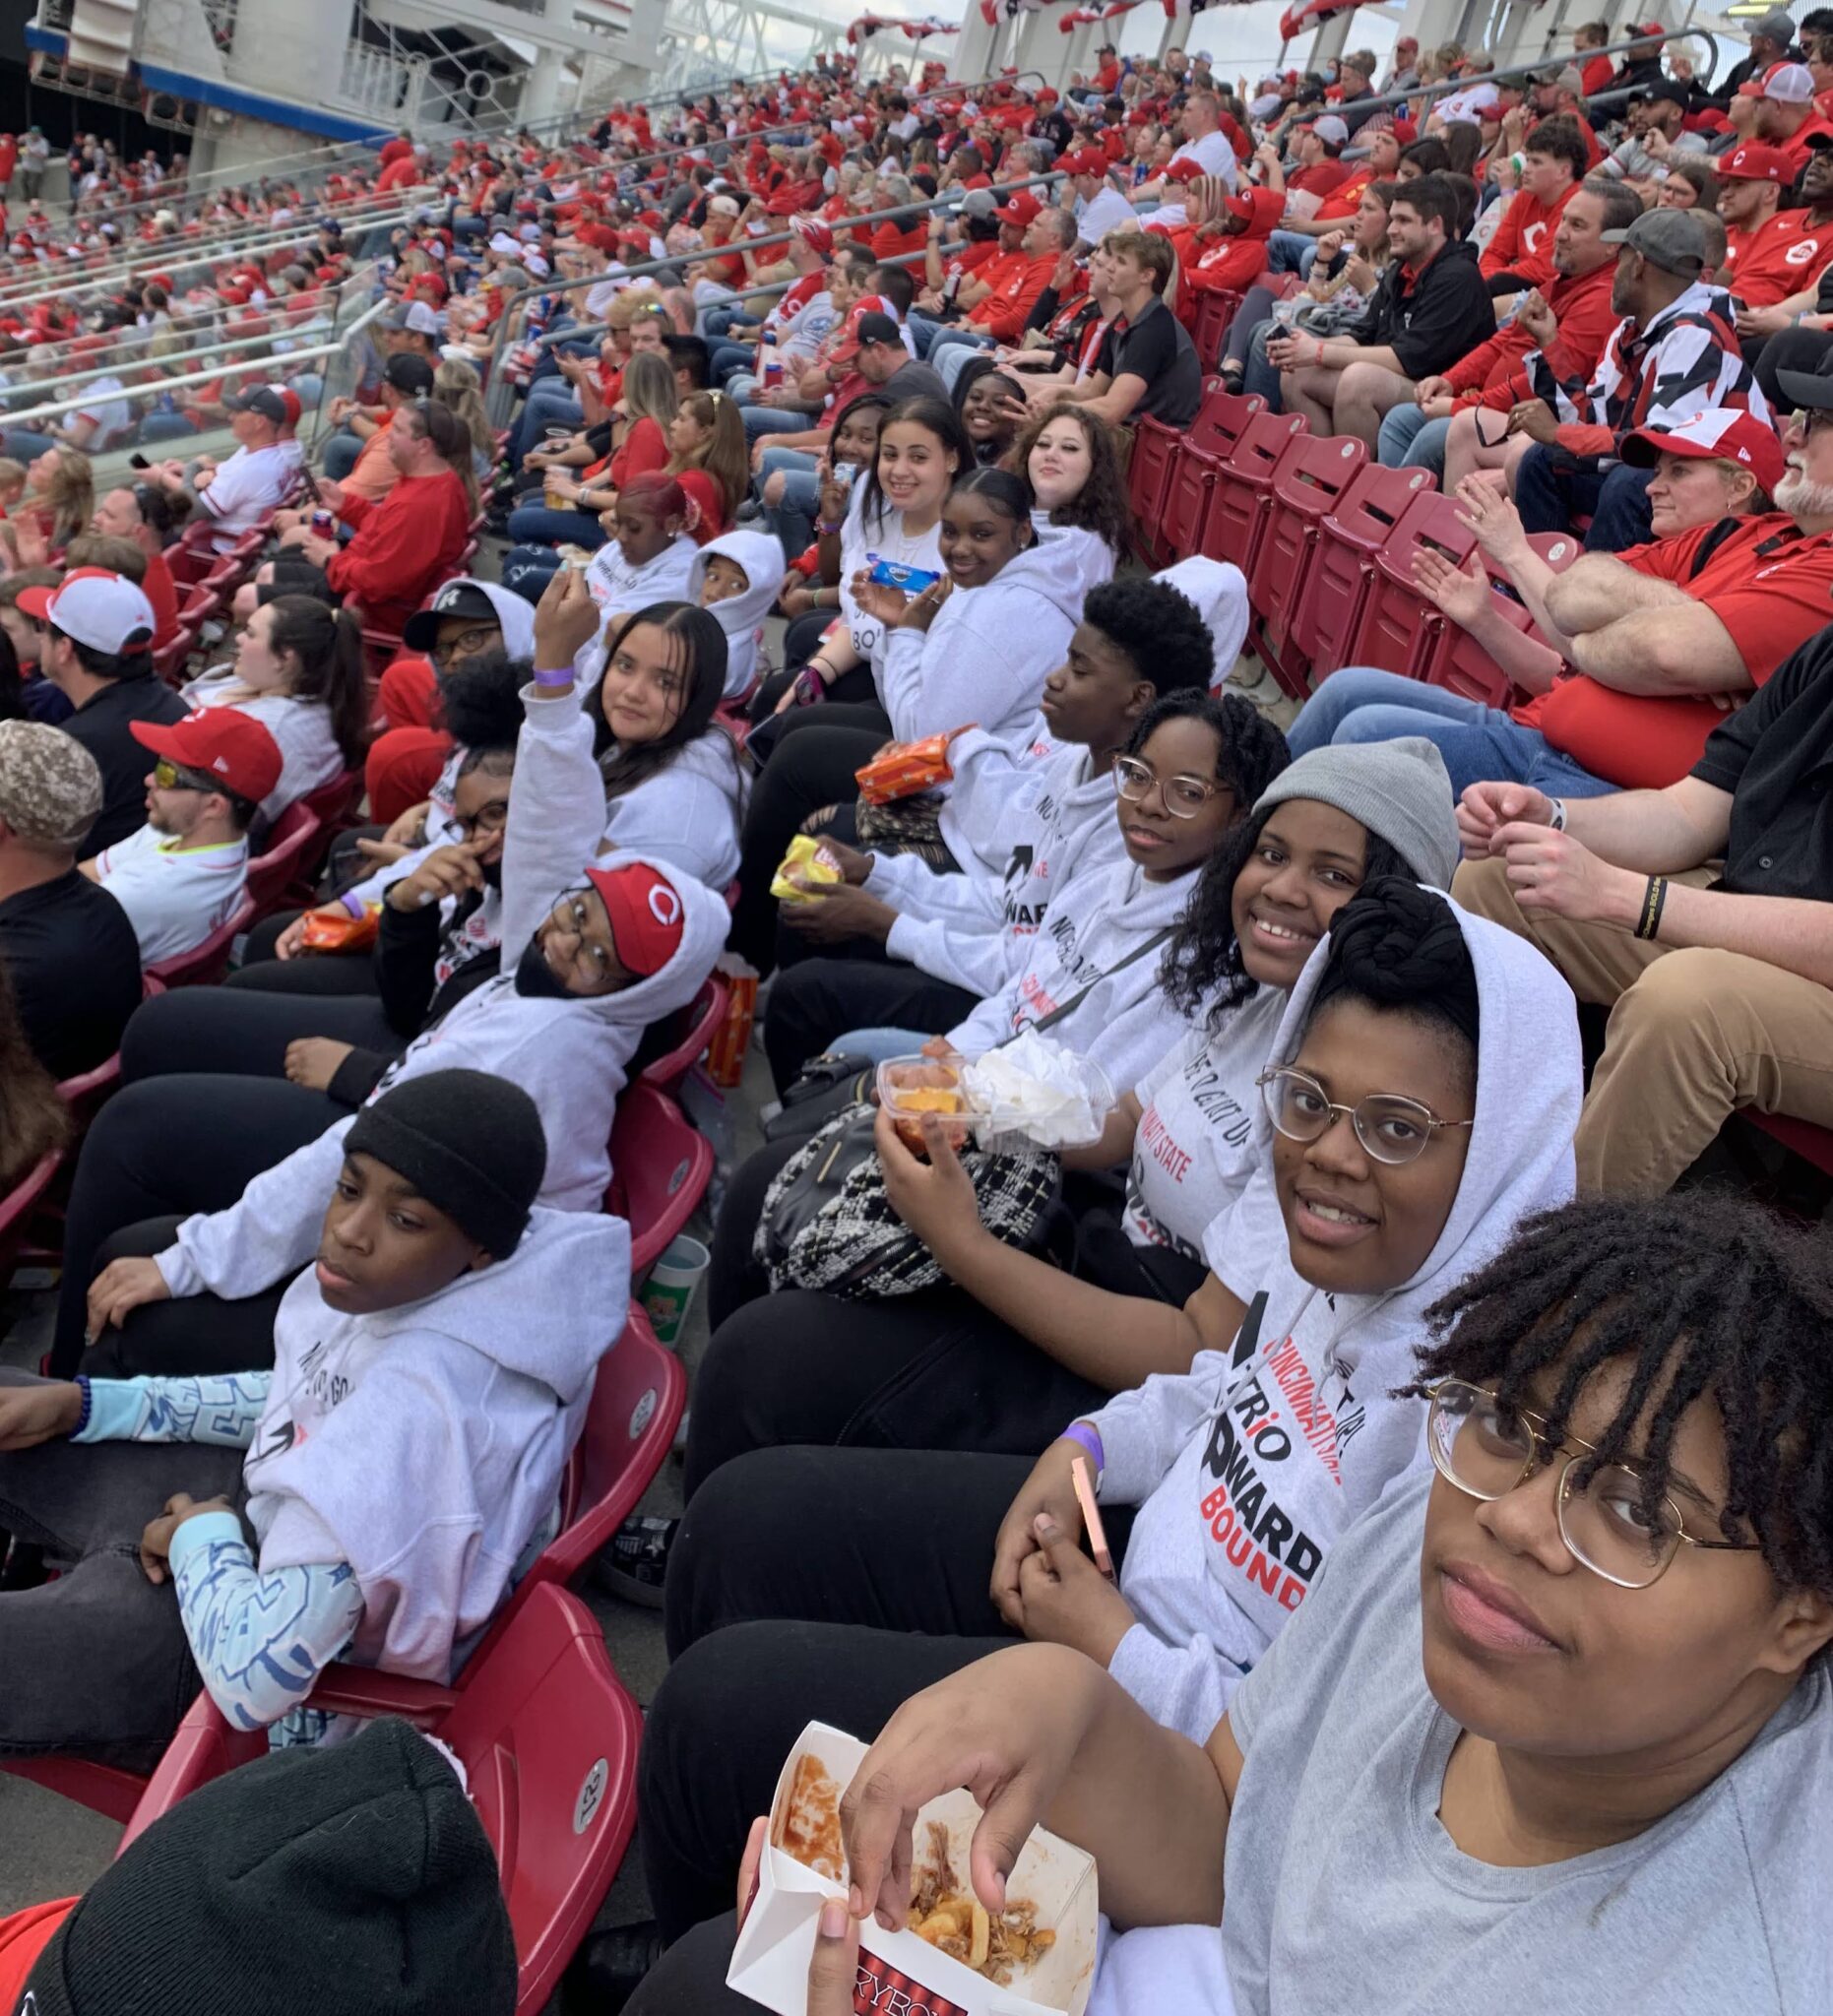 Cincinnati State joined Reds Opening Day festivities Cincinnati State